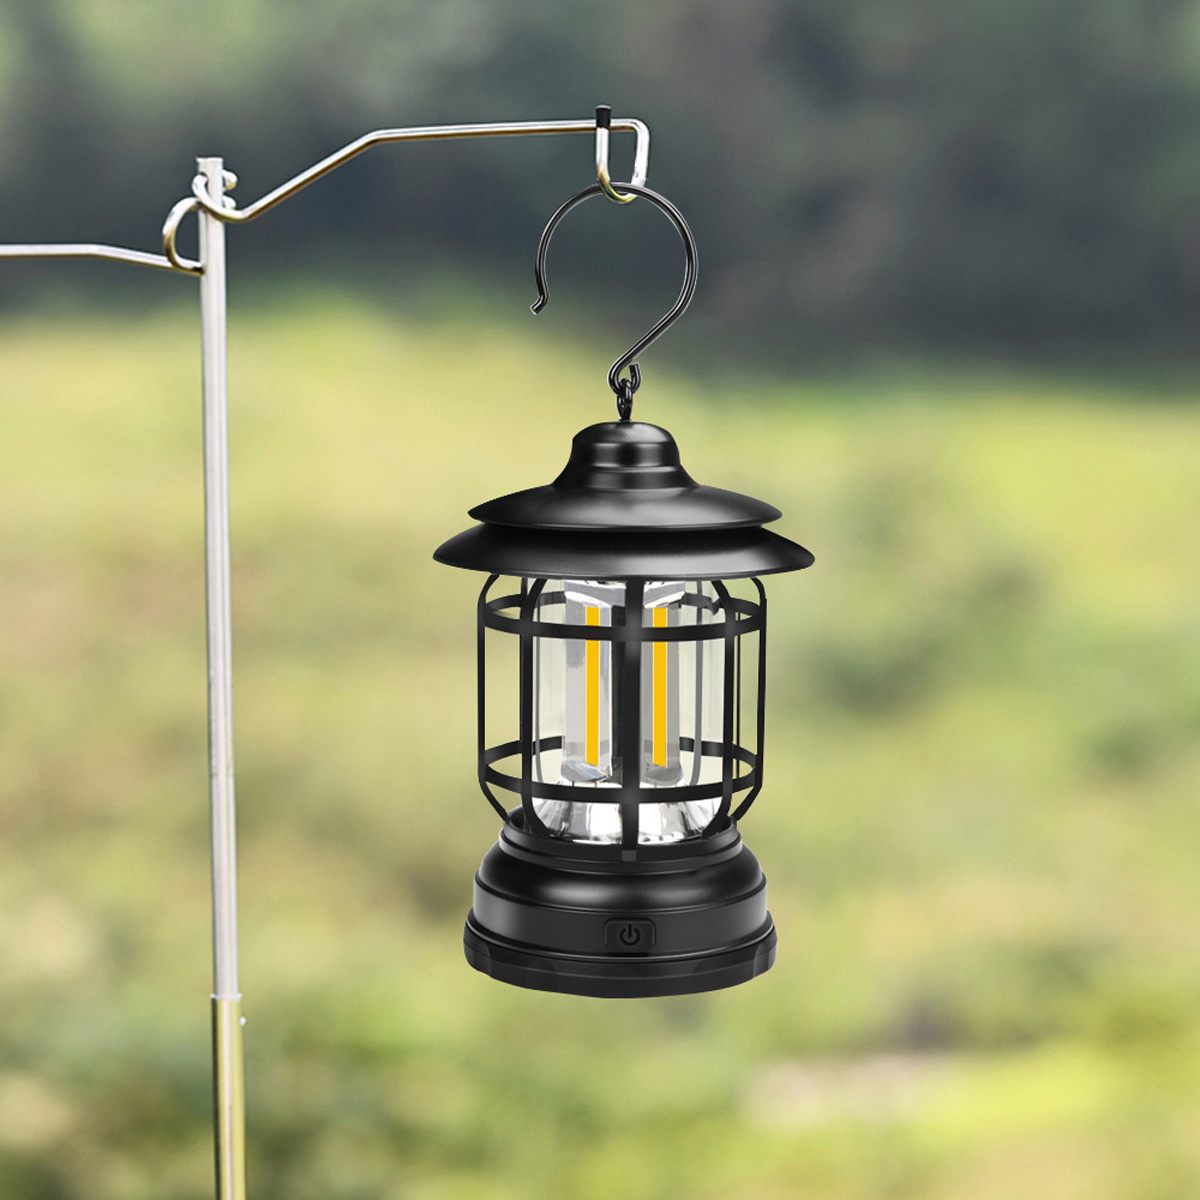 Outdoor-COB-Camping-Lamp-300LM-Retro-Light-Portable-Emergency-Lighting-Tent-Kerosene-Lantern-For-Hik-1930684-9